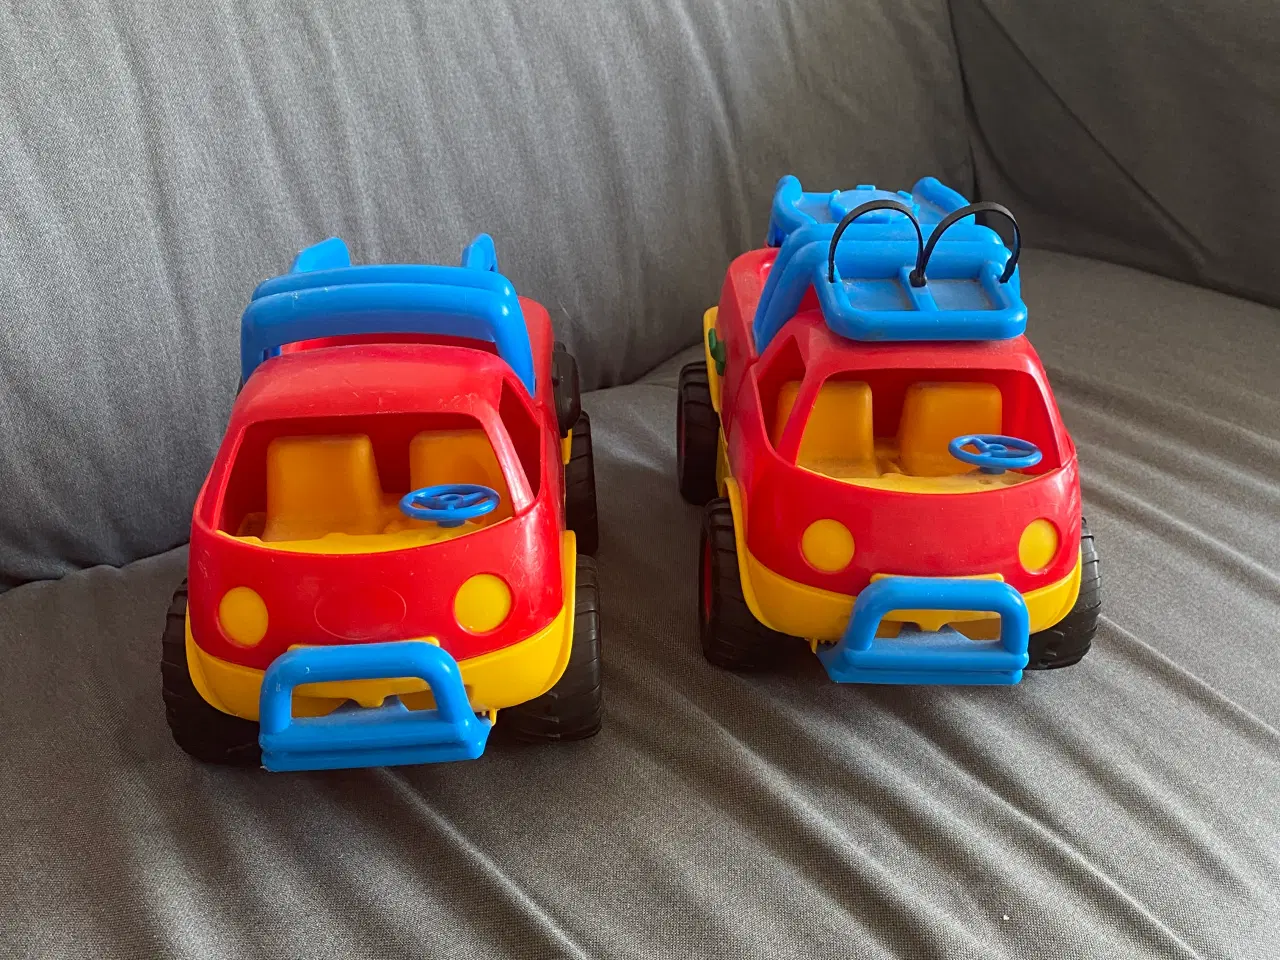 Billede 1 - Legetøjs biler